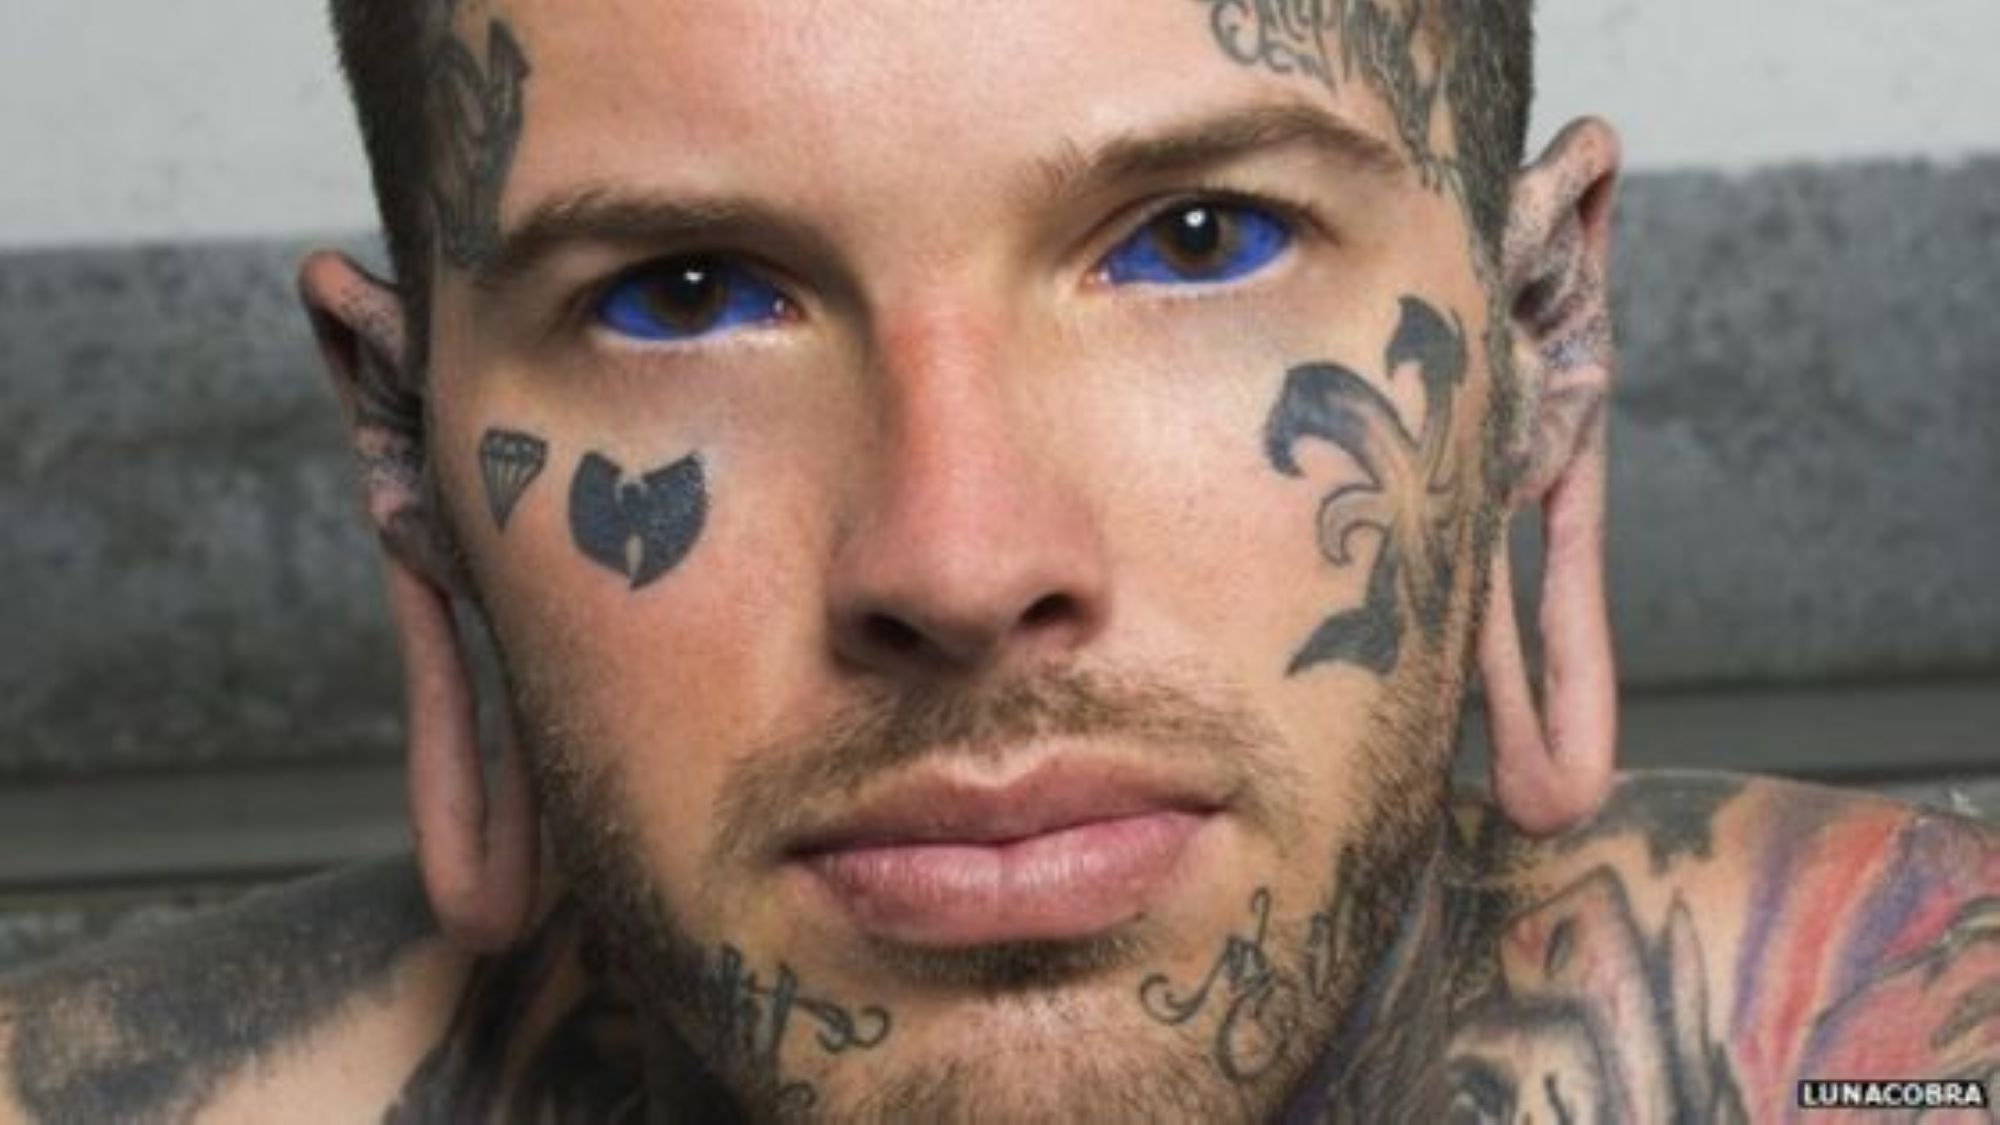 татуировки на глазах у мужчин